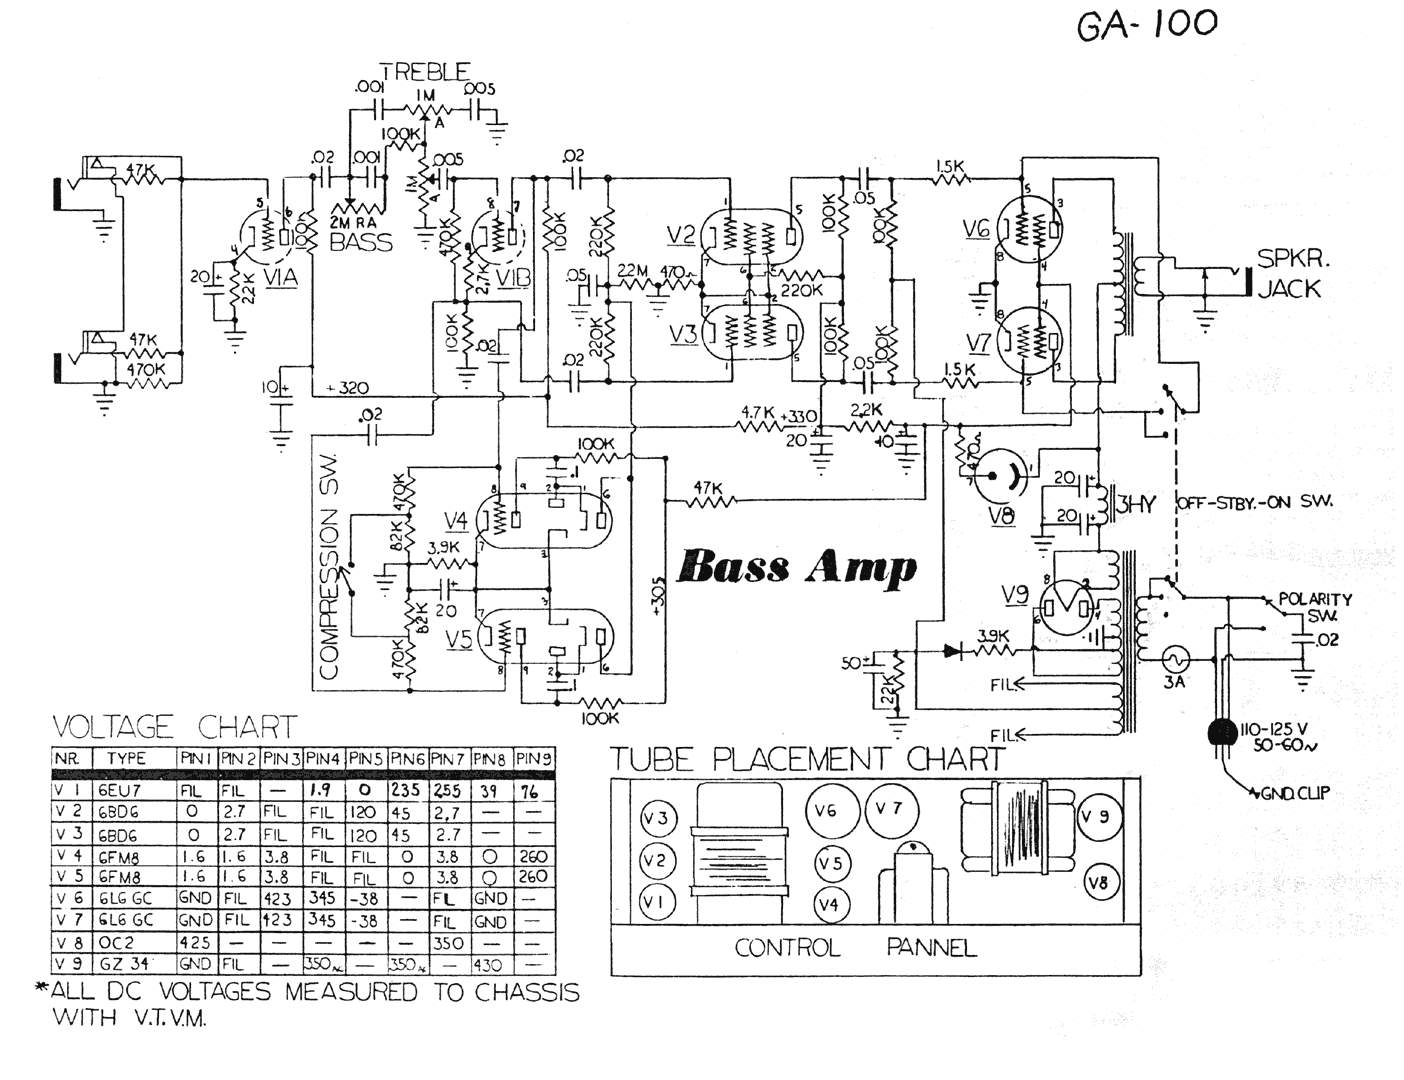 Схема Gibson - GA-100 Bass Amp